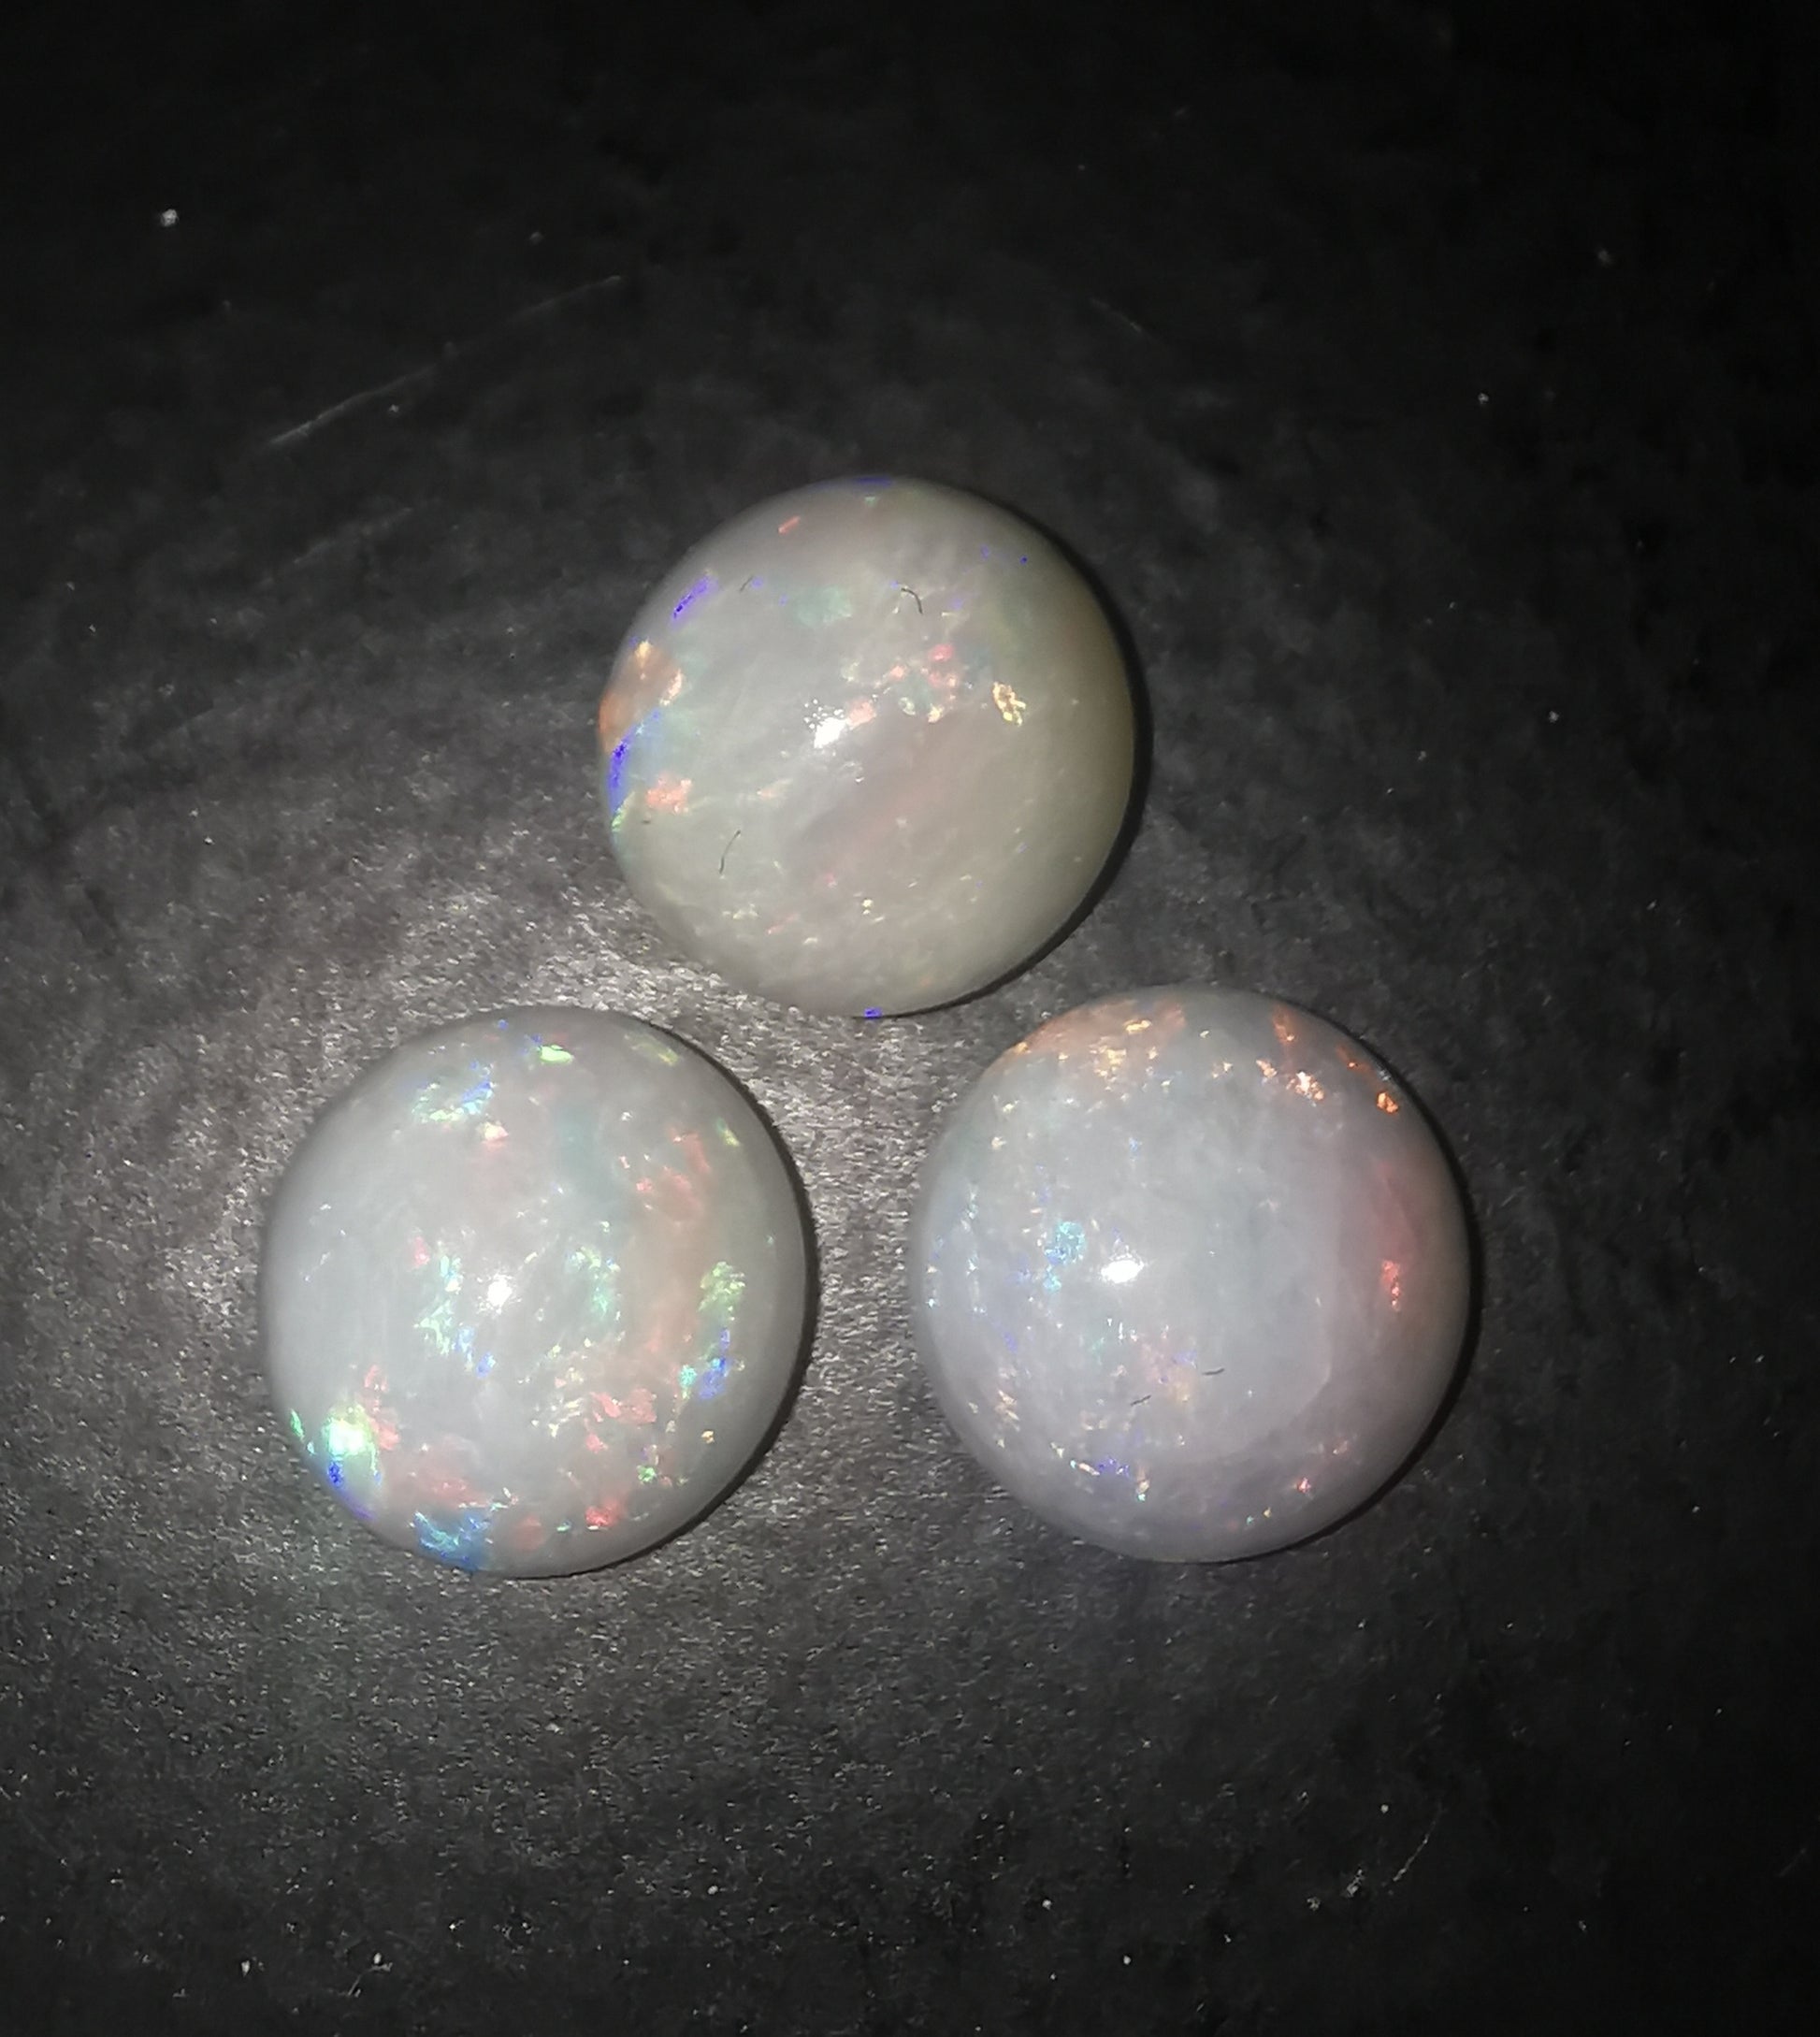 Australian White Opal Round 6 mm Lot